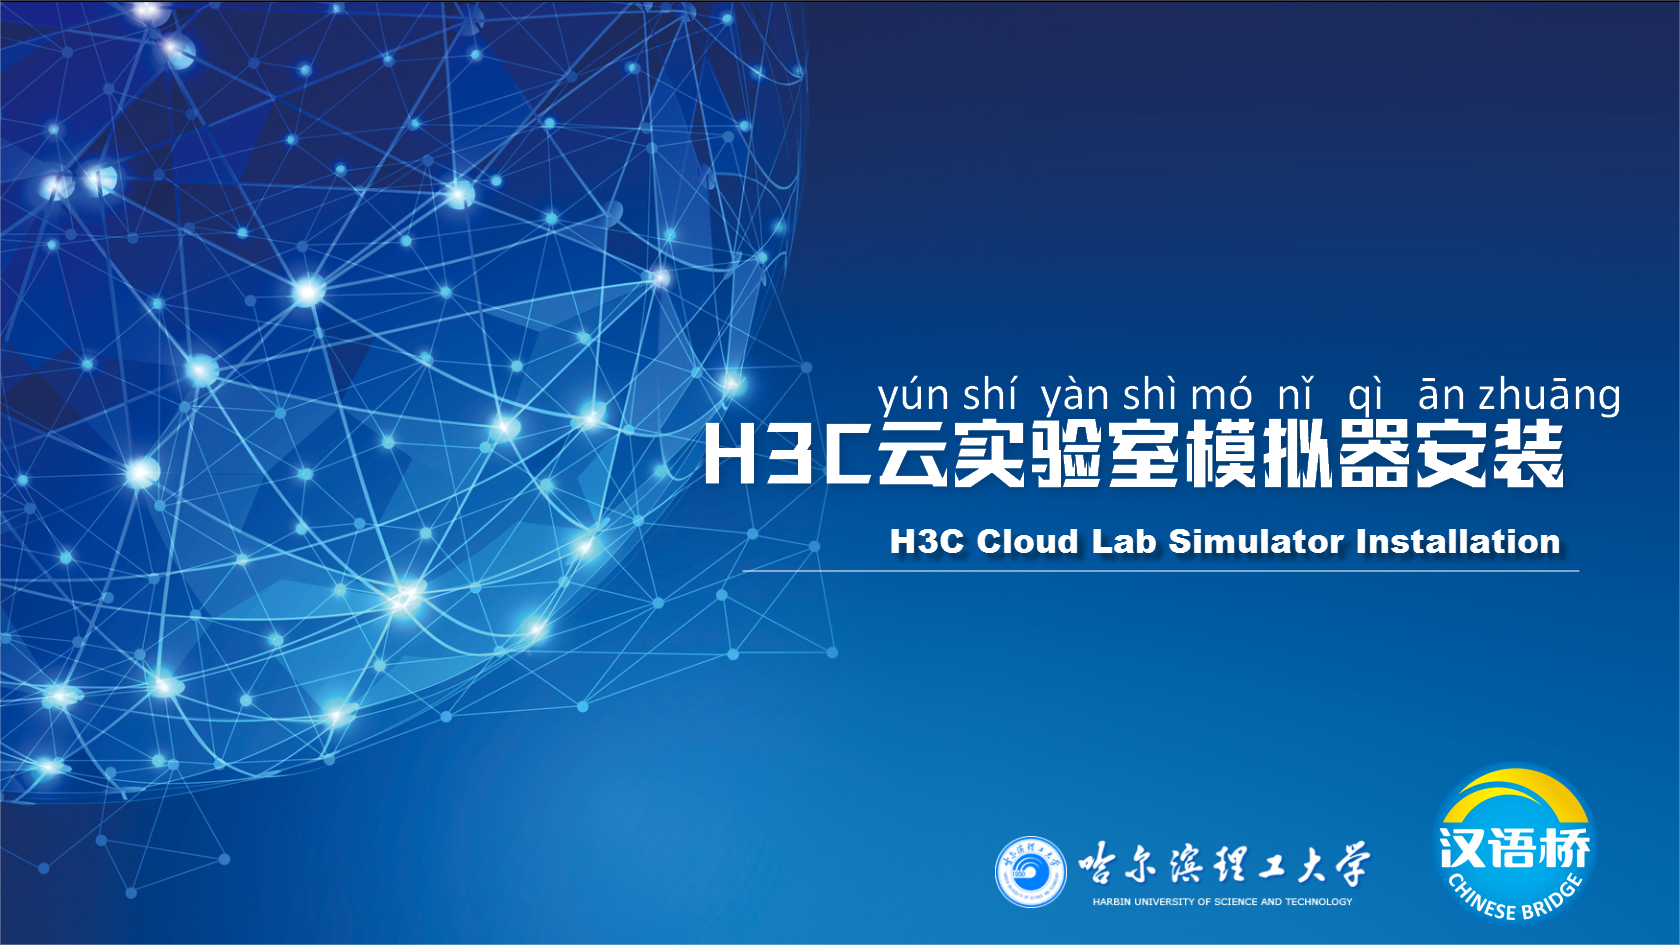 H3C Cloud Lab Simulator Installation